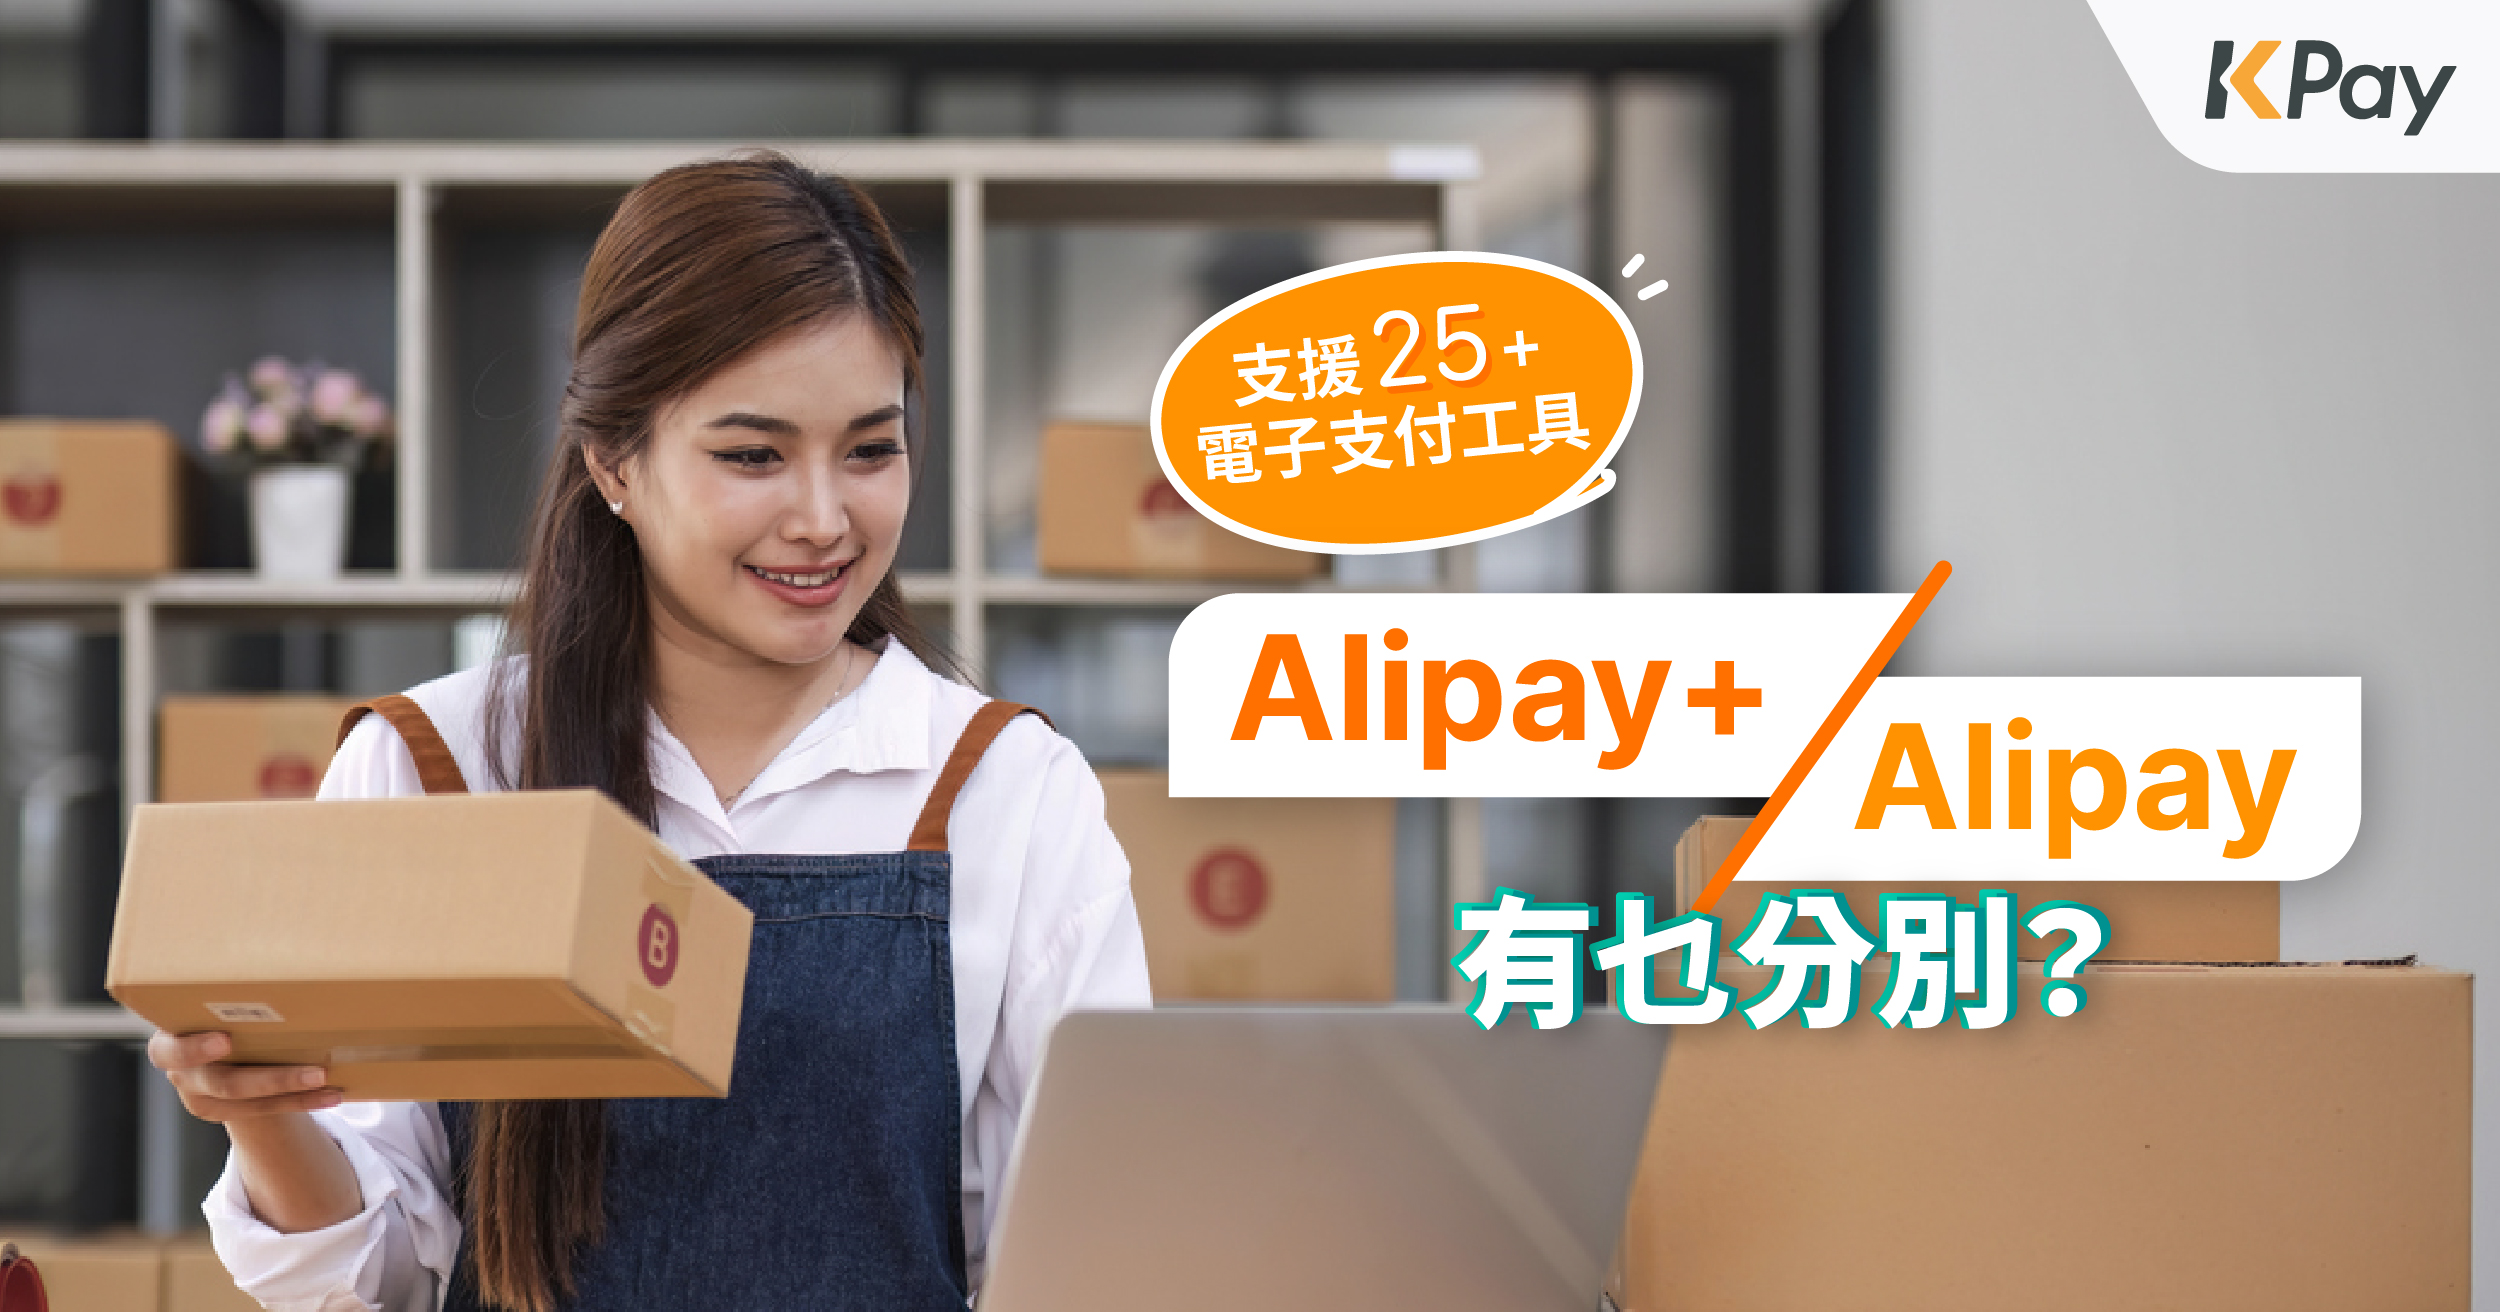 KPay網誌_Alipay+_1200x630.jpg